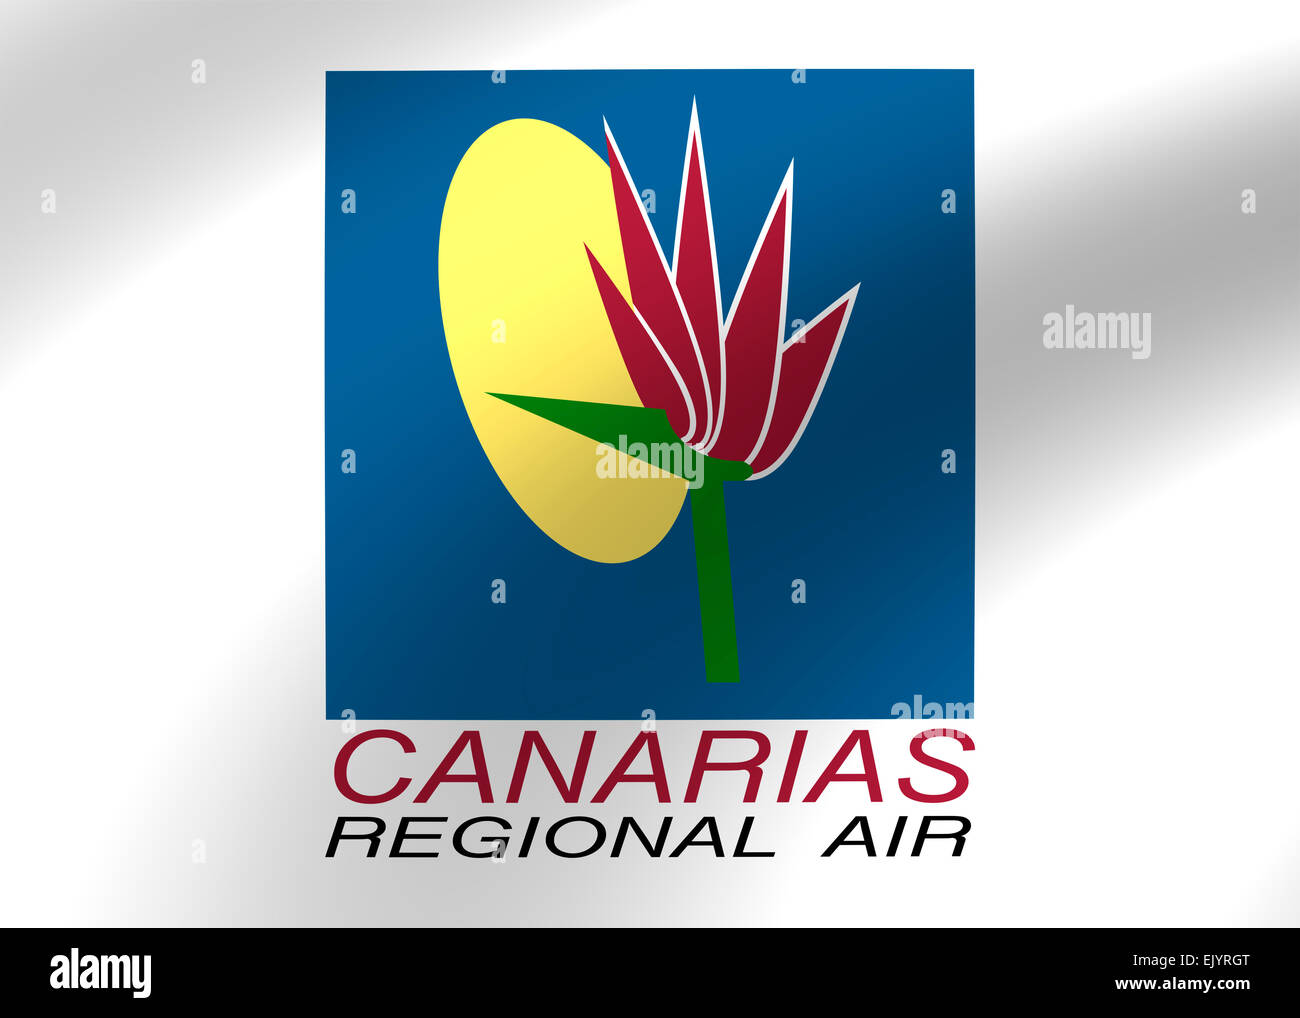 Canarias Regional Air Airline logo symbol icon flag emblem Stock Photo